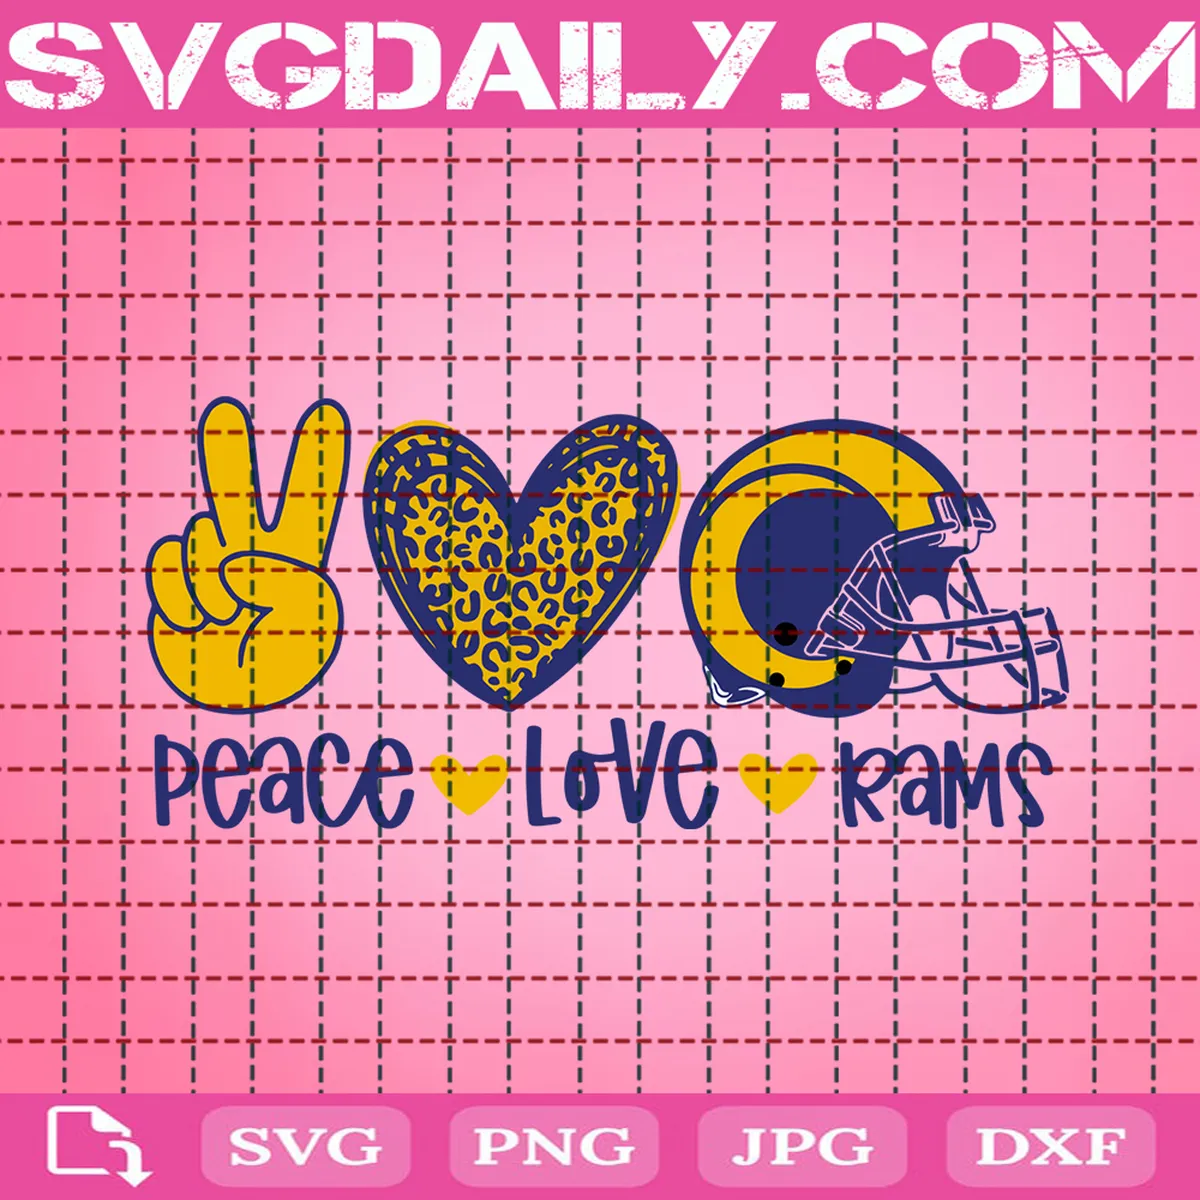 Peace Love Svg